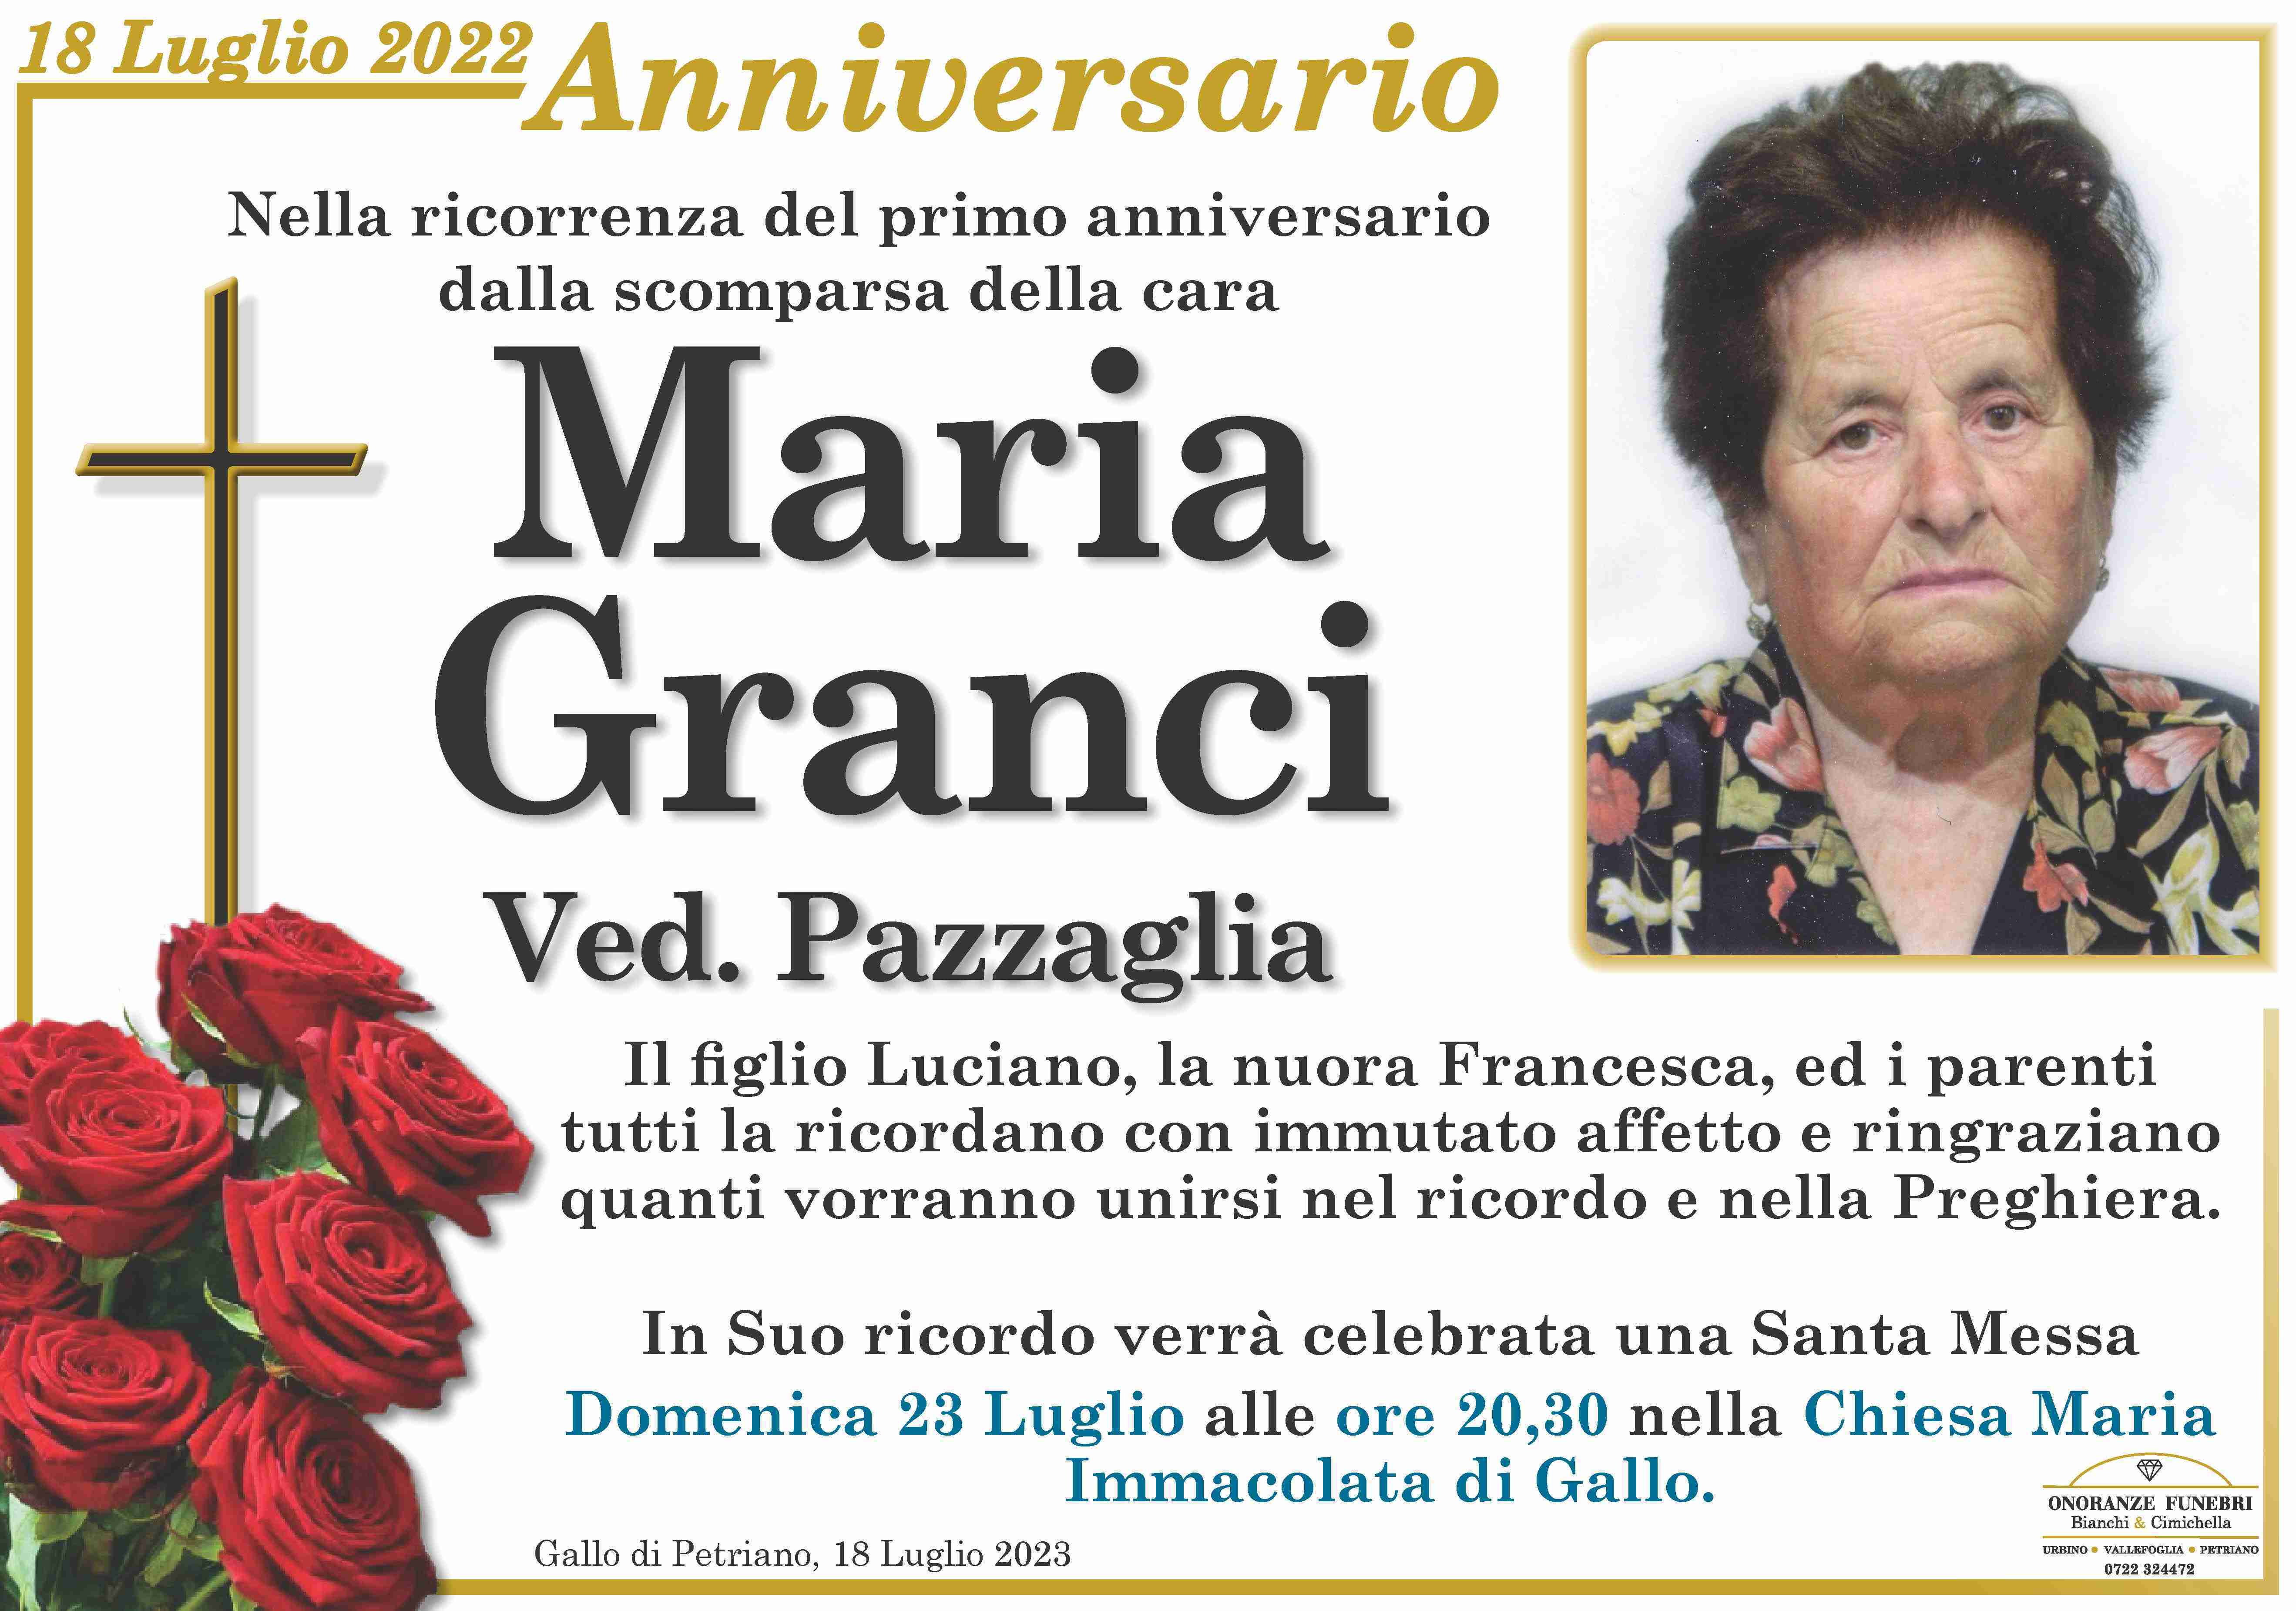 Maria Granci